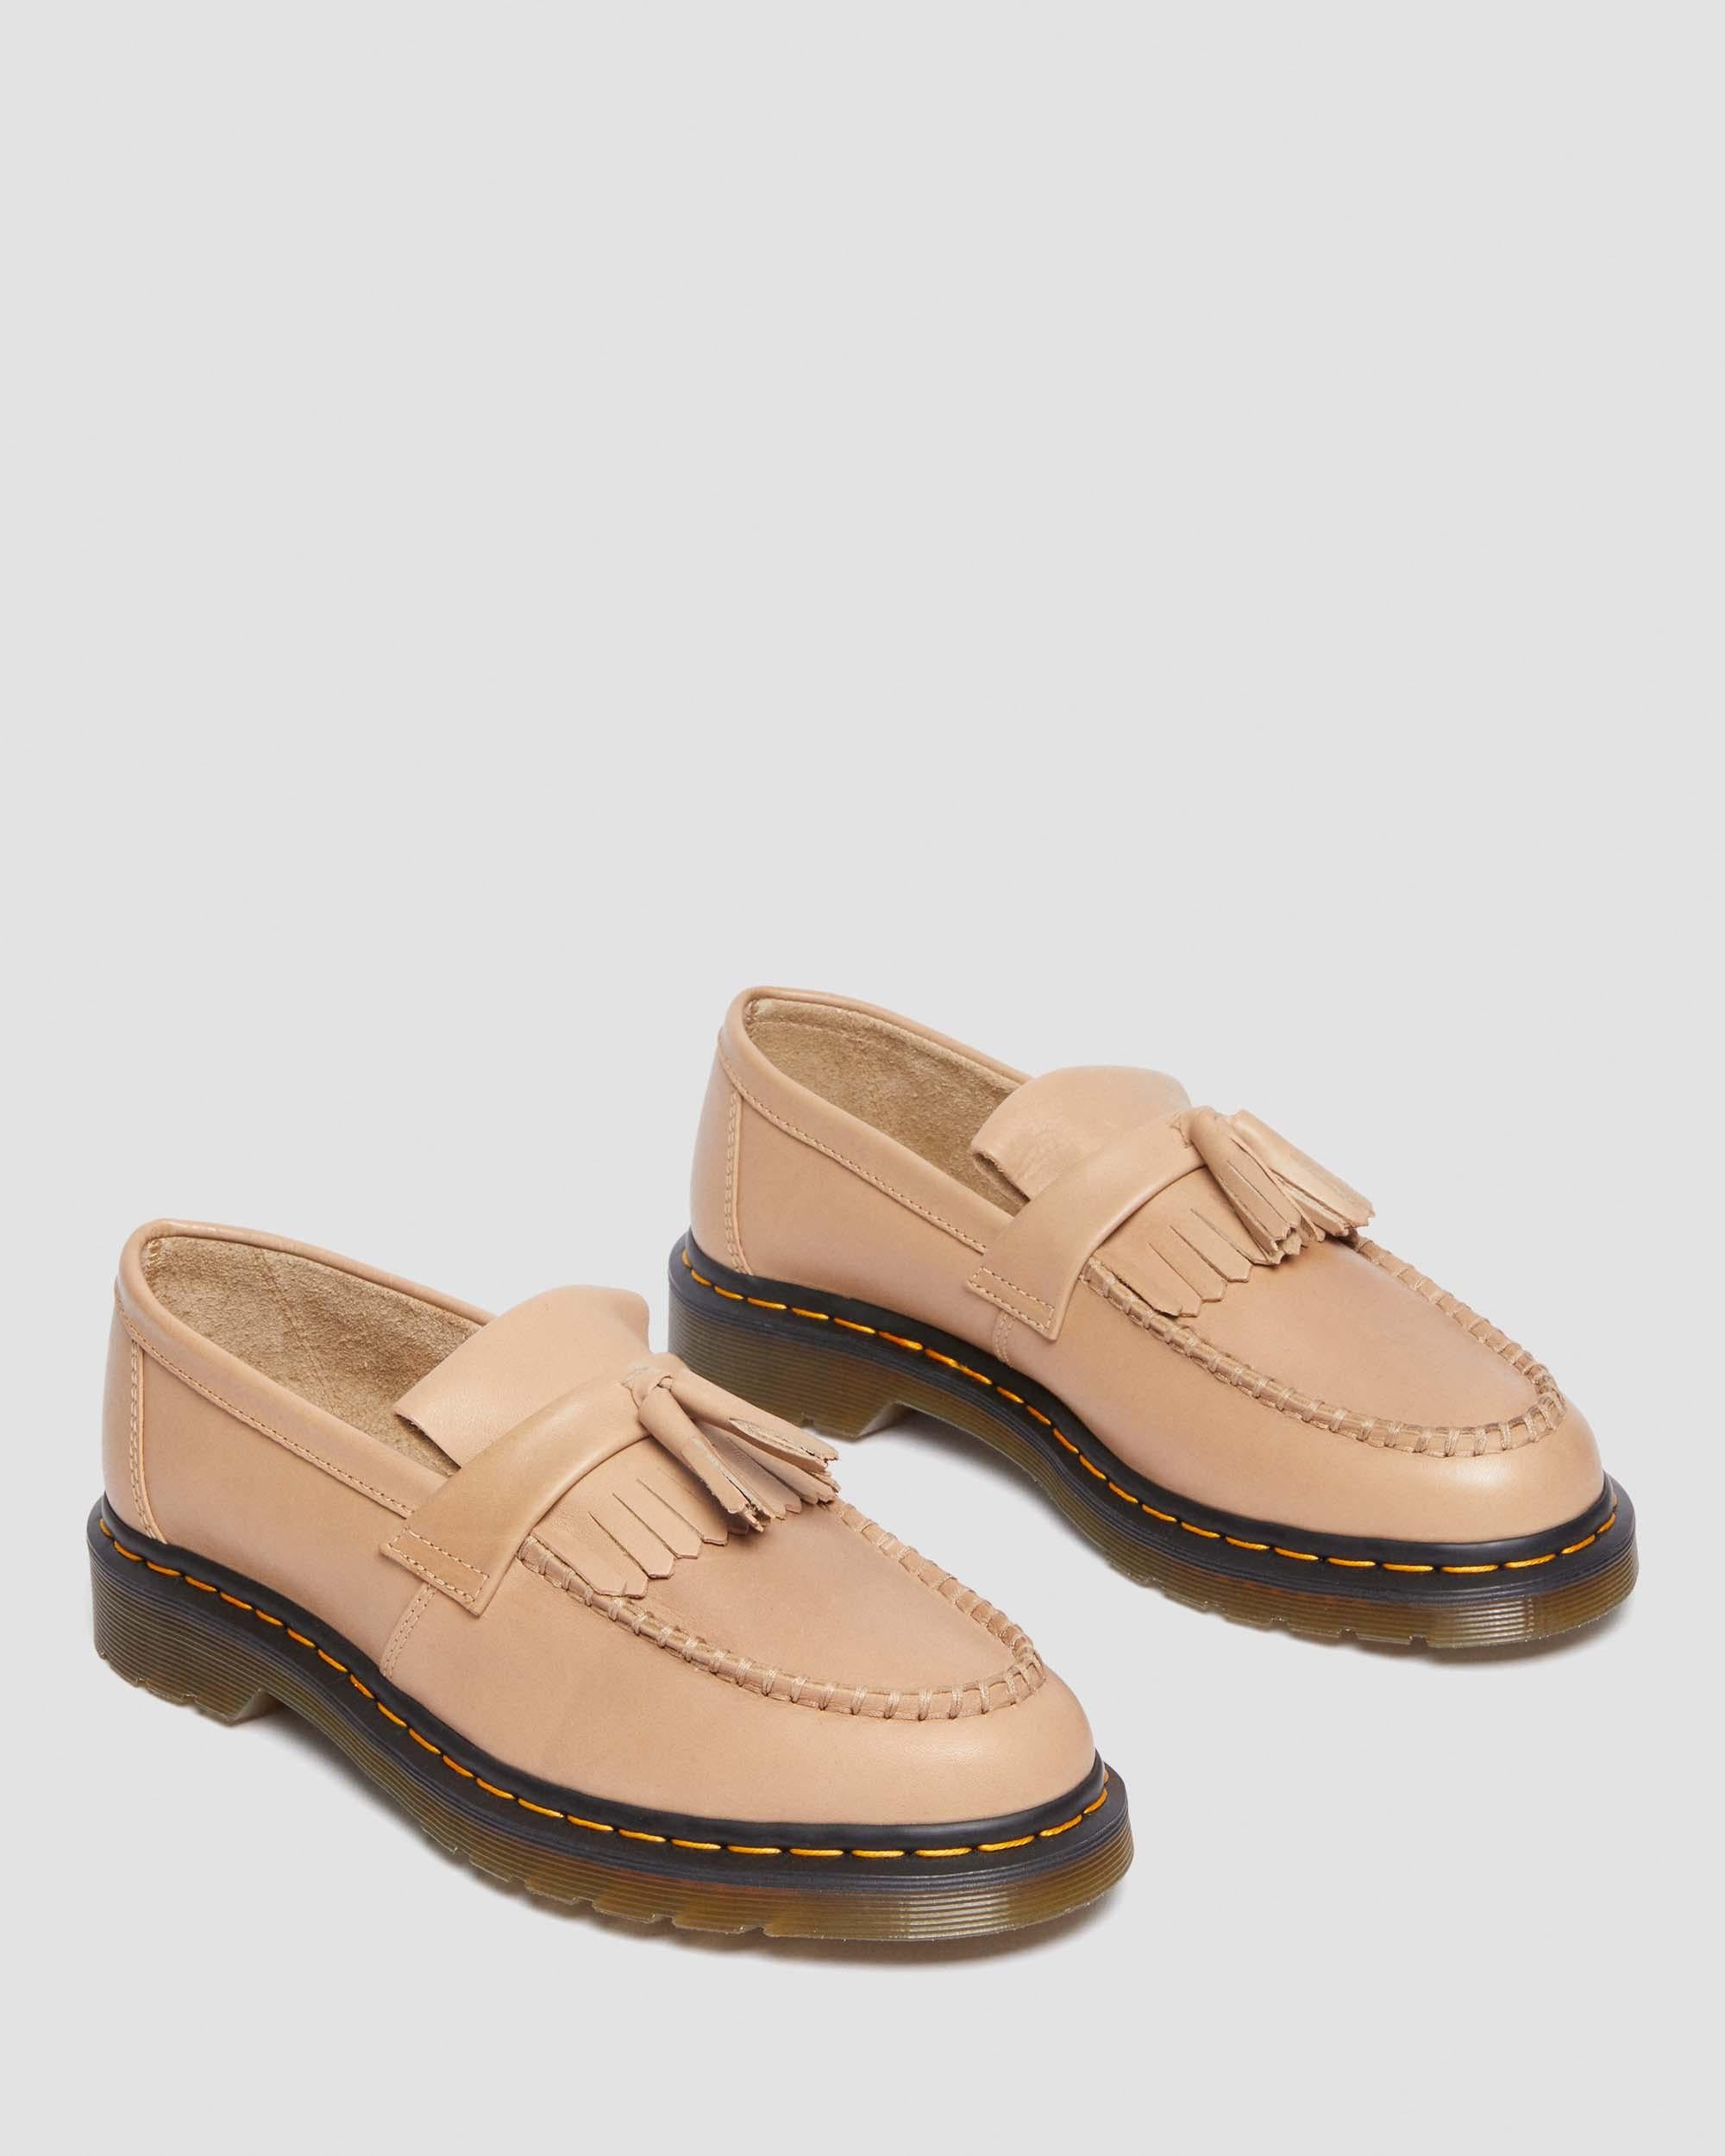 Adrian Yellow Stitch 黃色縫線 Carrara 皮鞋